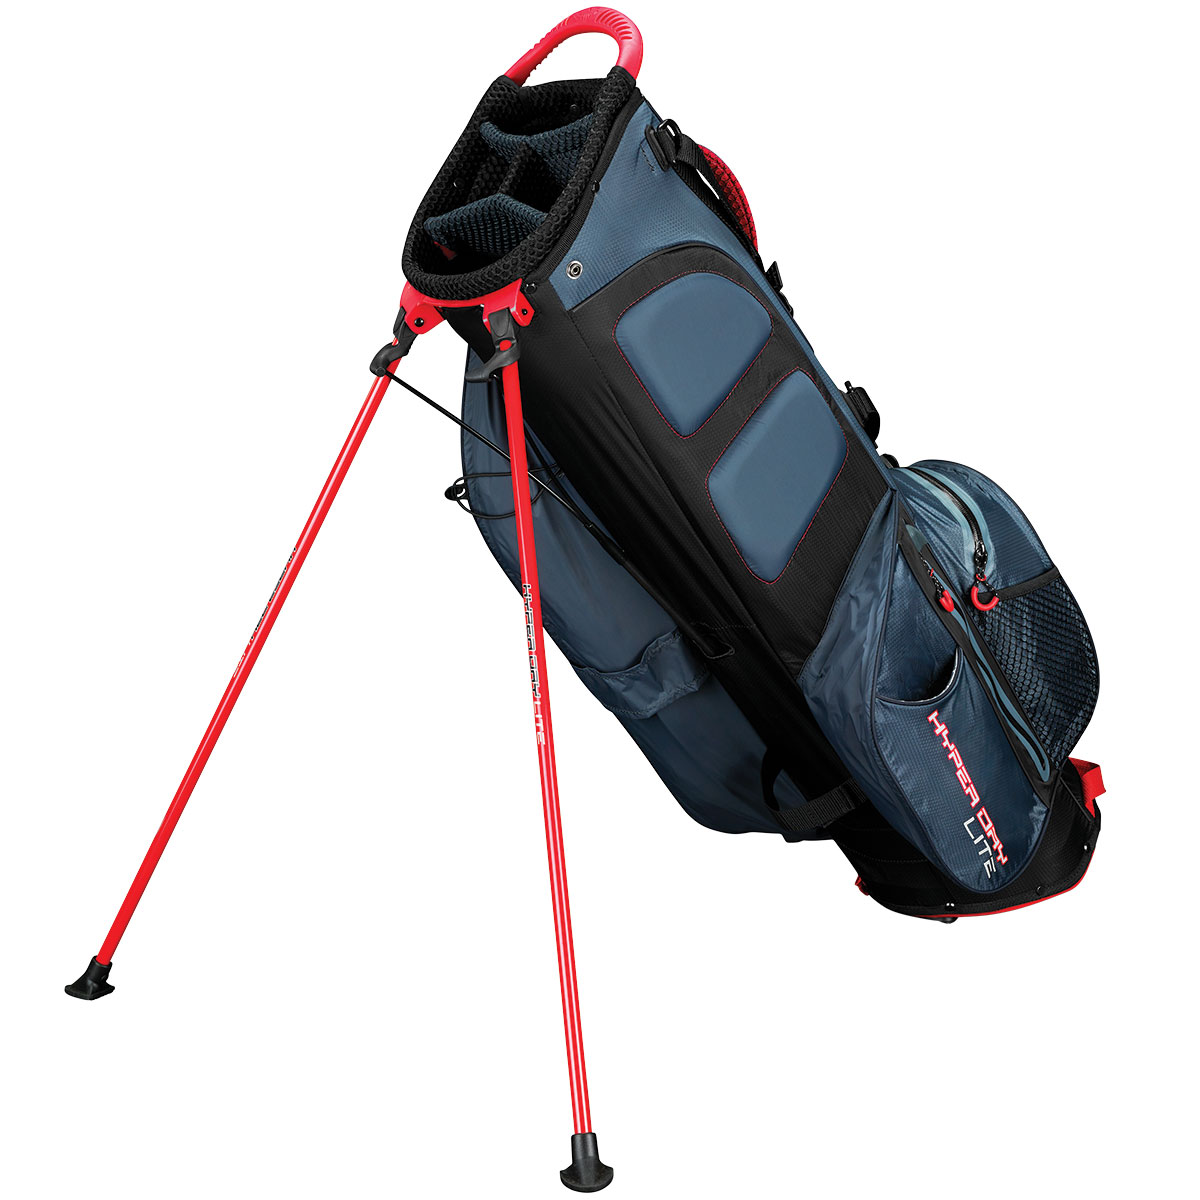 Callaway Golf Hyper Dry Lite Stand Bag from american golf